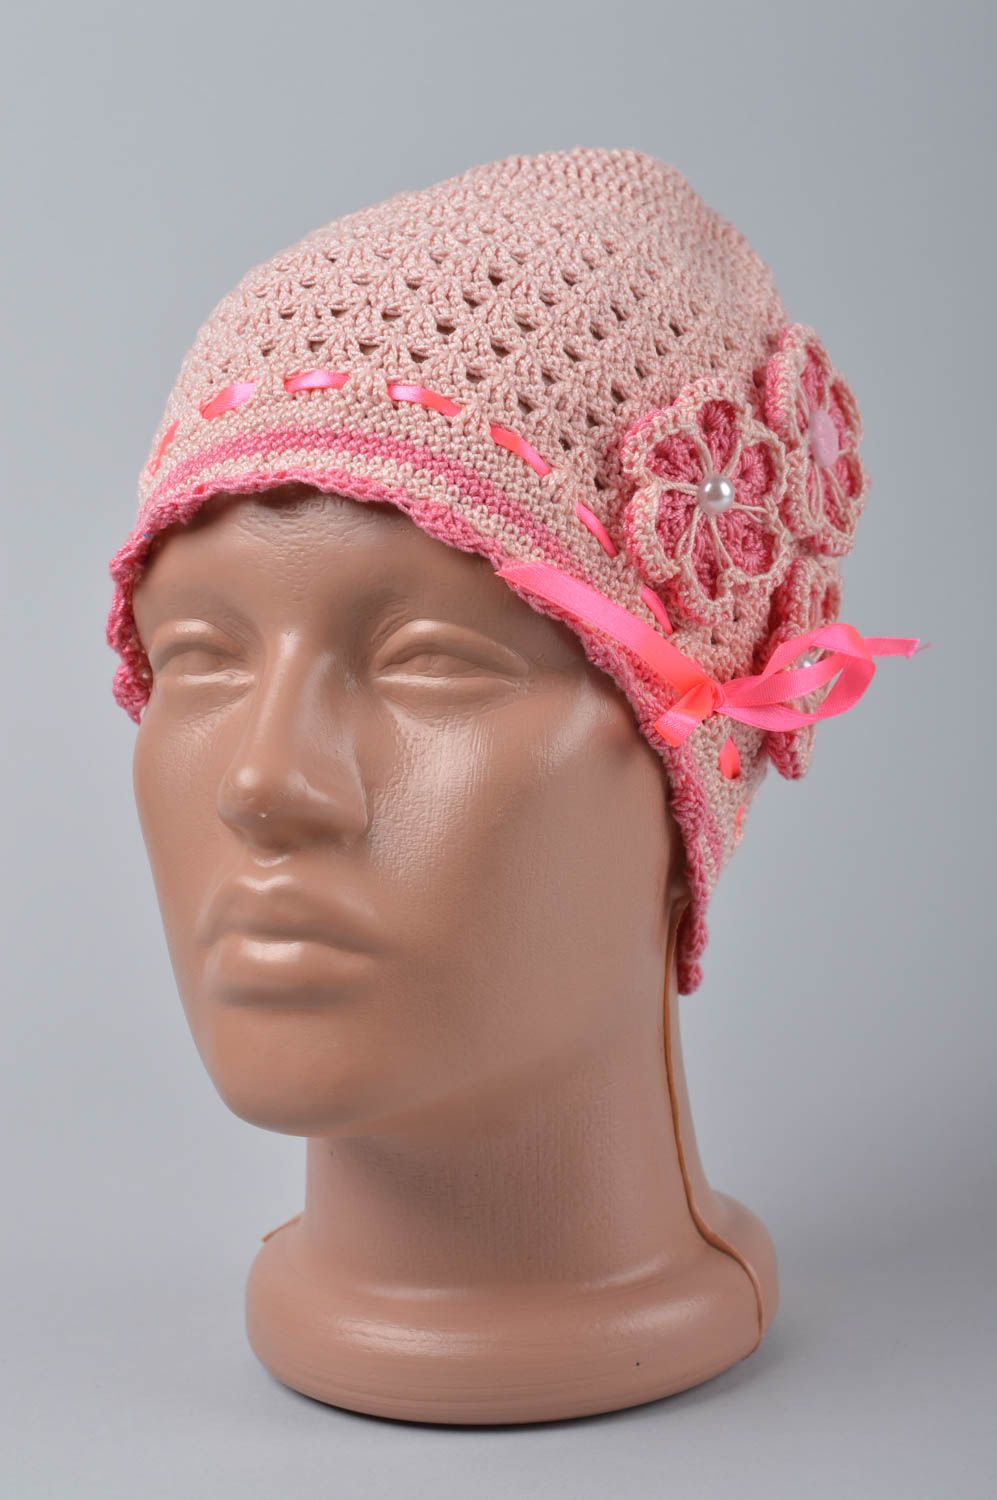 Stylish handmade crochet hat designs fashion kids accessories for girls photo 1